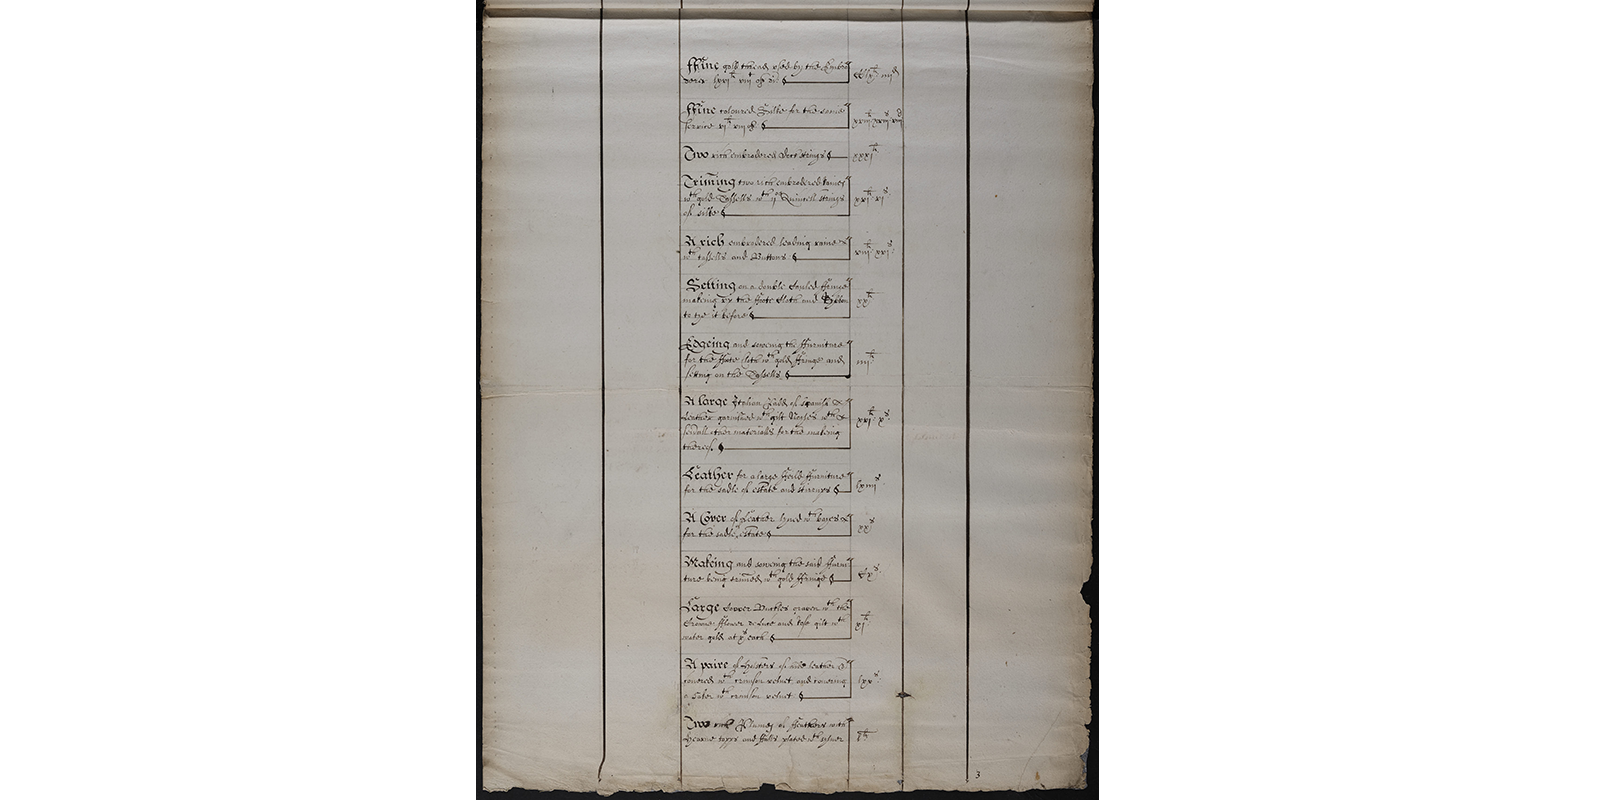 Hand-written document concerning Charles II's coronation